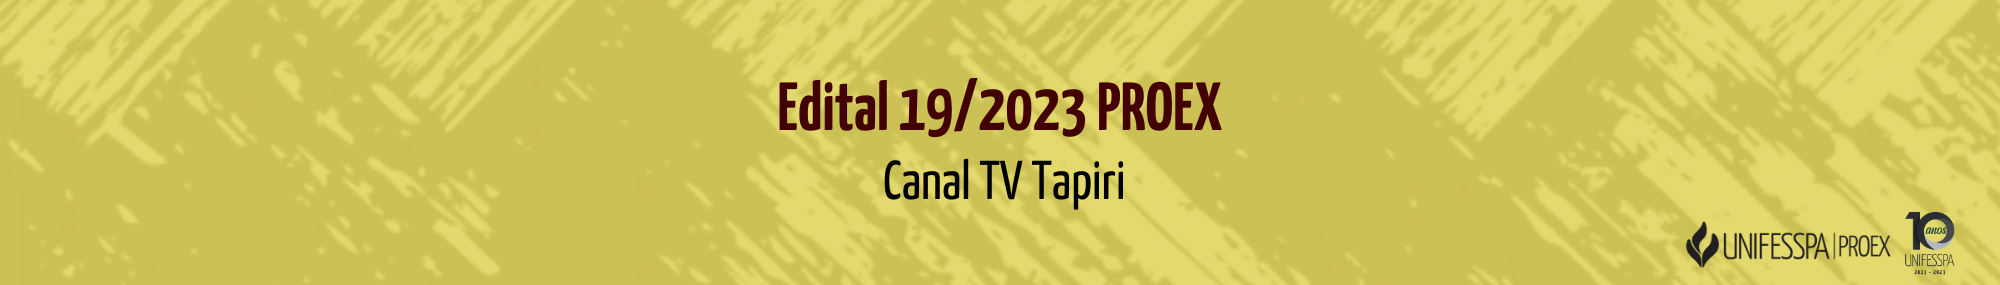 _e-mail - tv tapiri.png